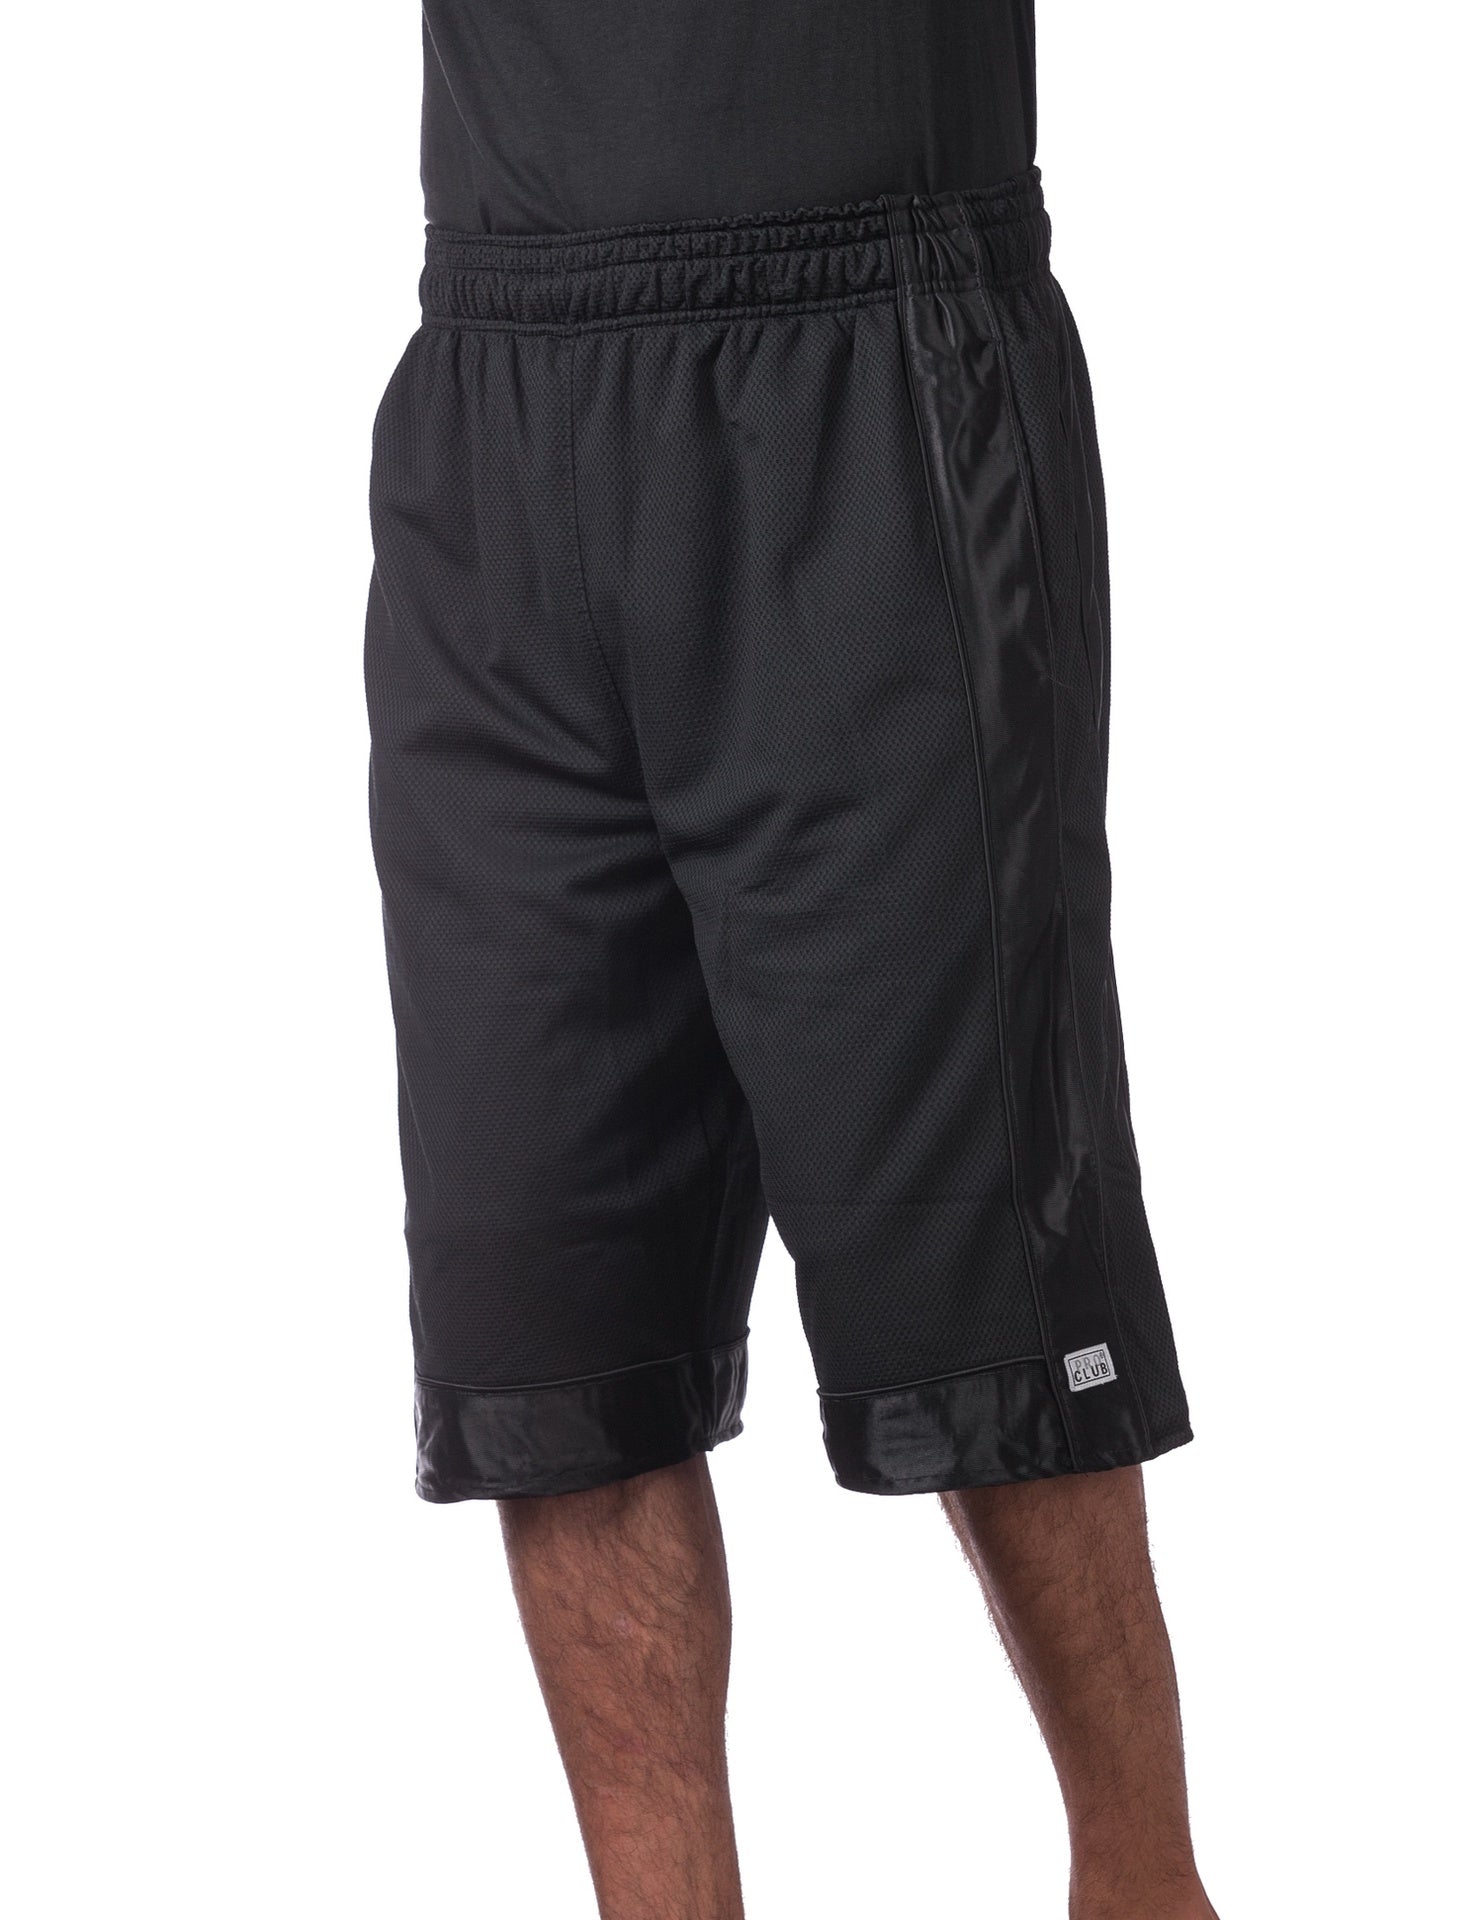 Pro Club Heavyweight Mesh Basketball Shorts - BLACK